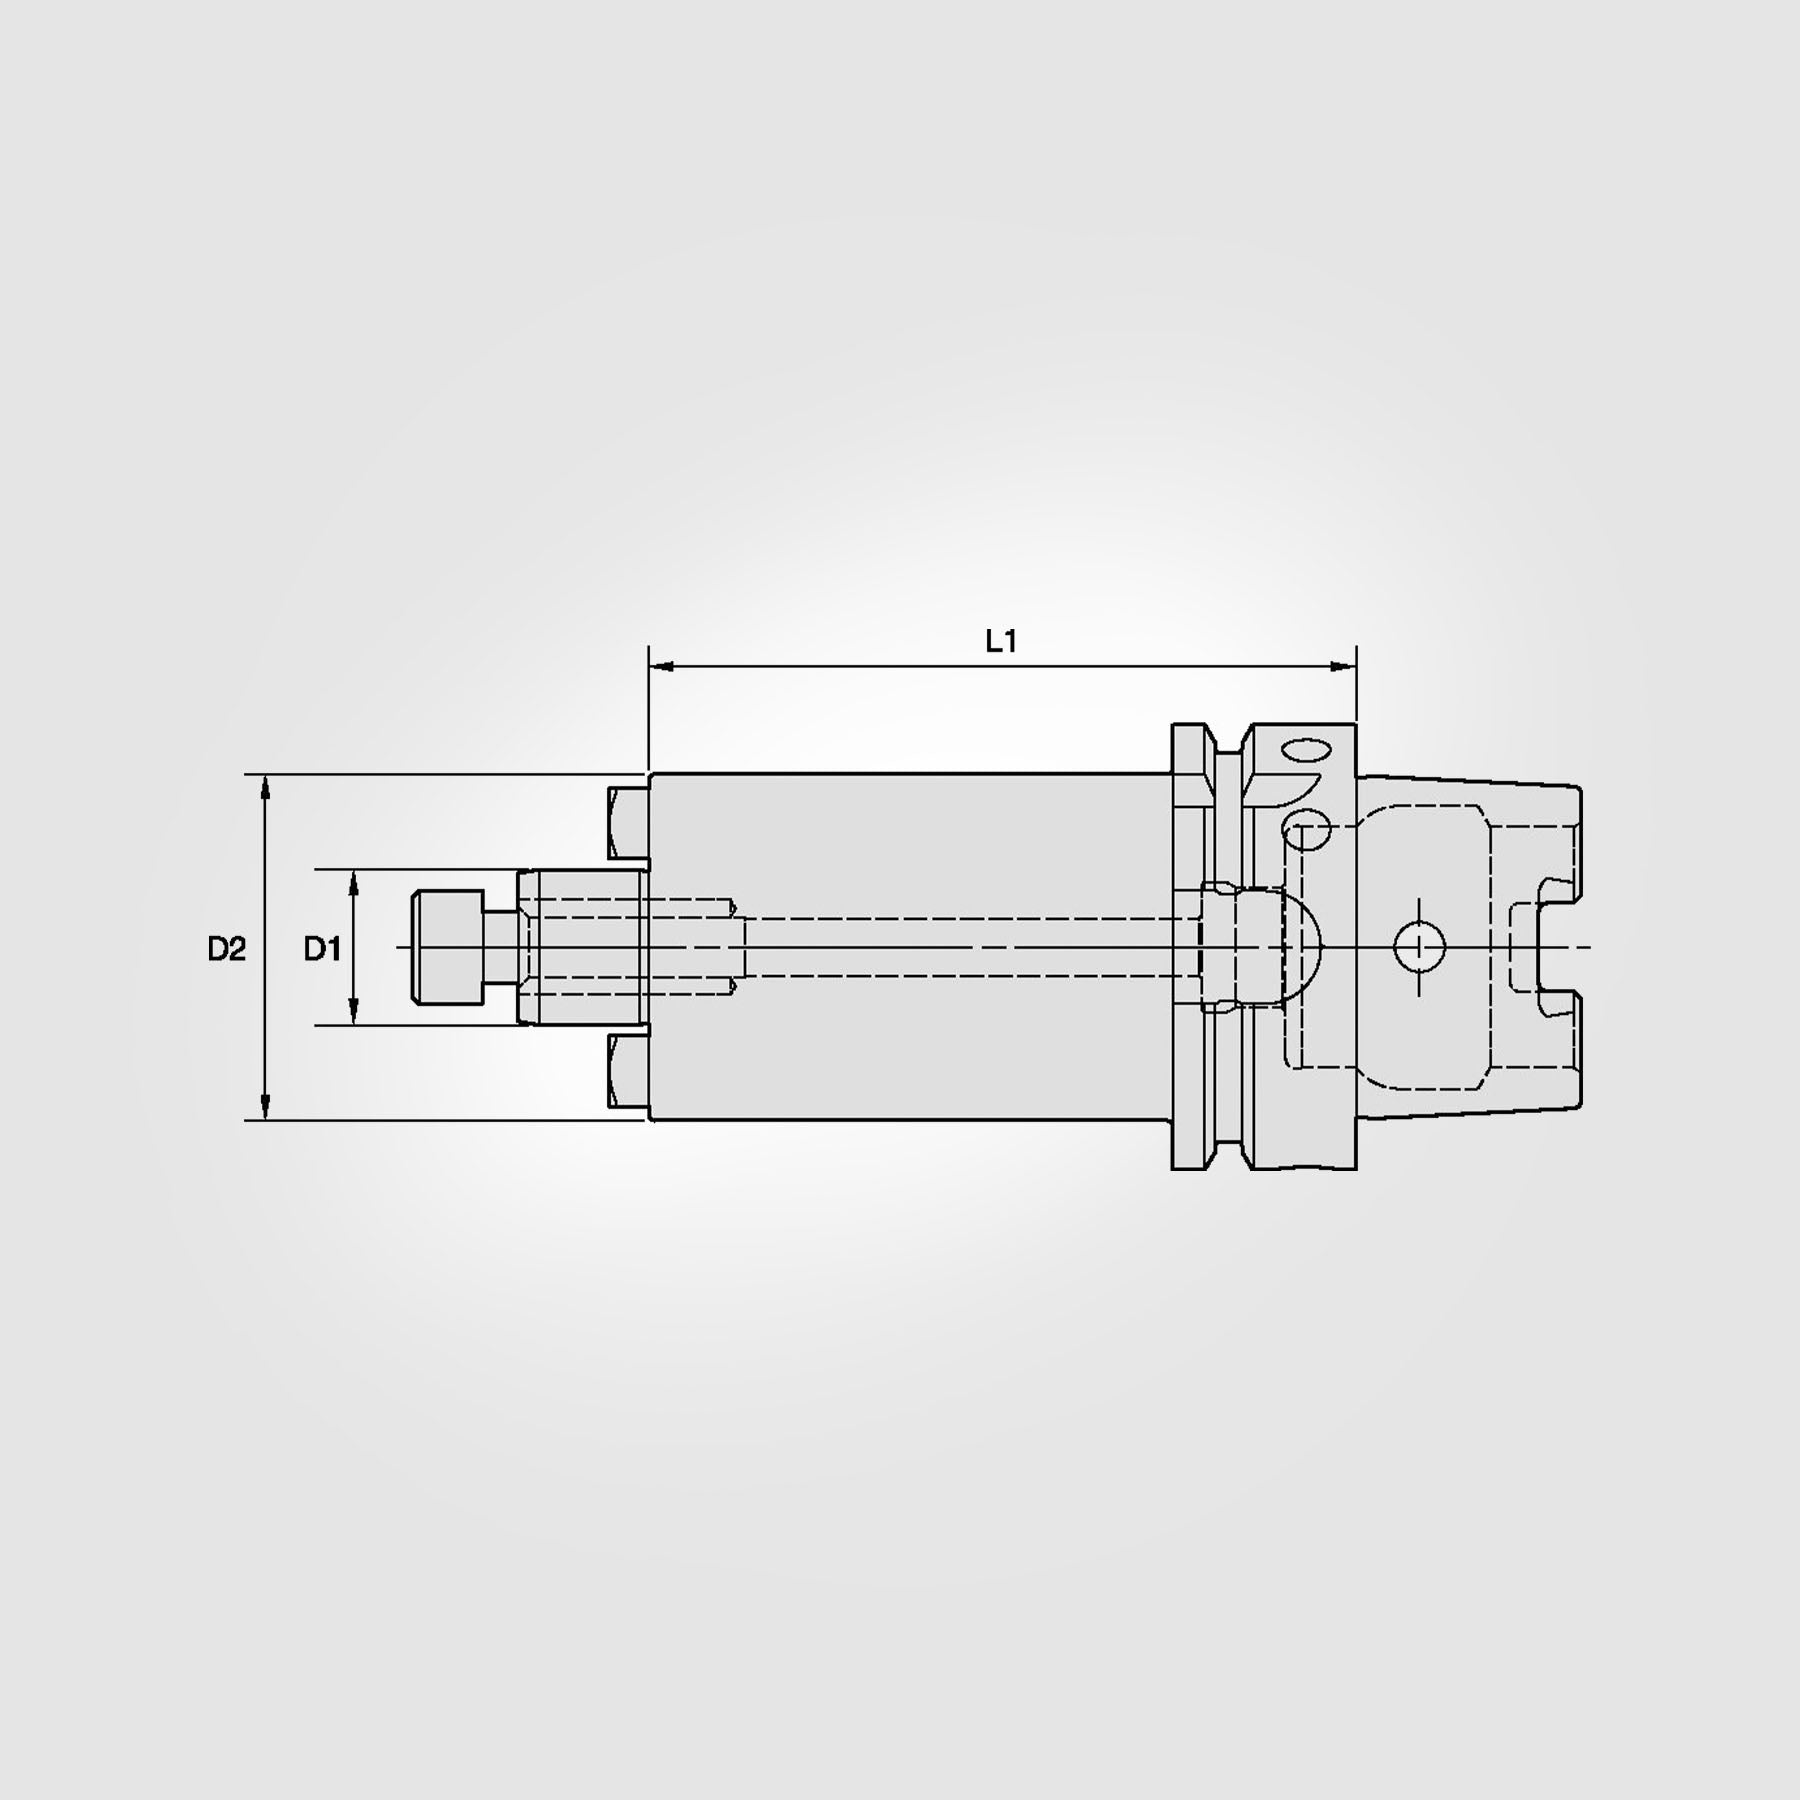 HSK100A Taper Shank 60mm Shell Mill Adapter (THROUGH COOLANT) | 3872514